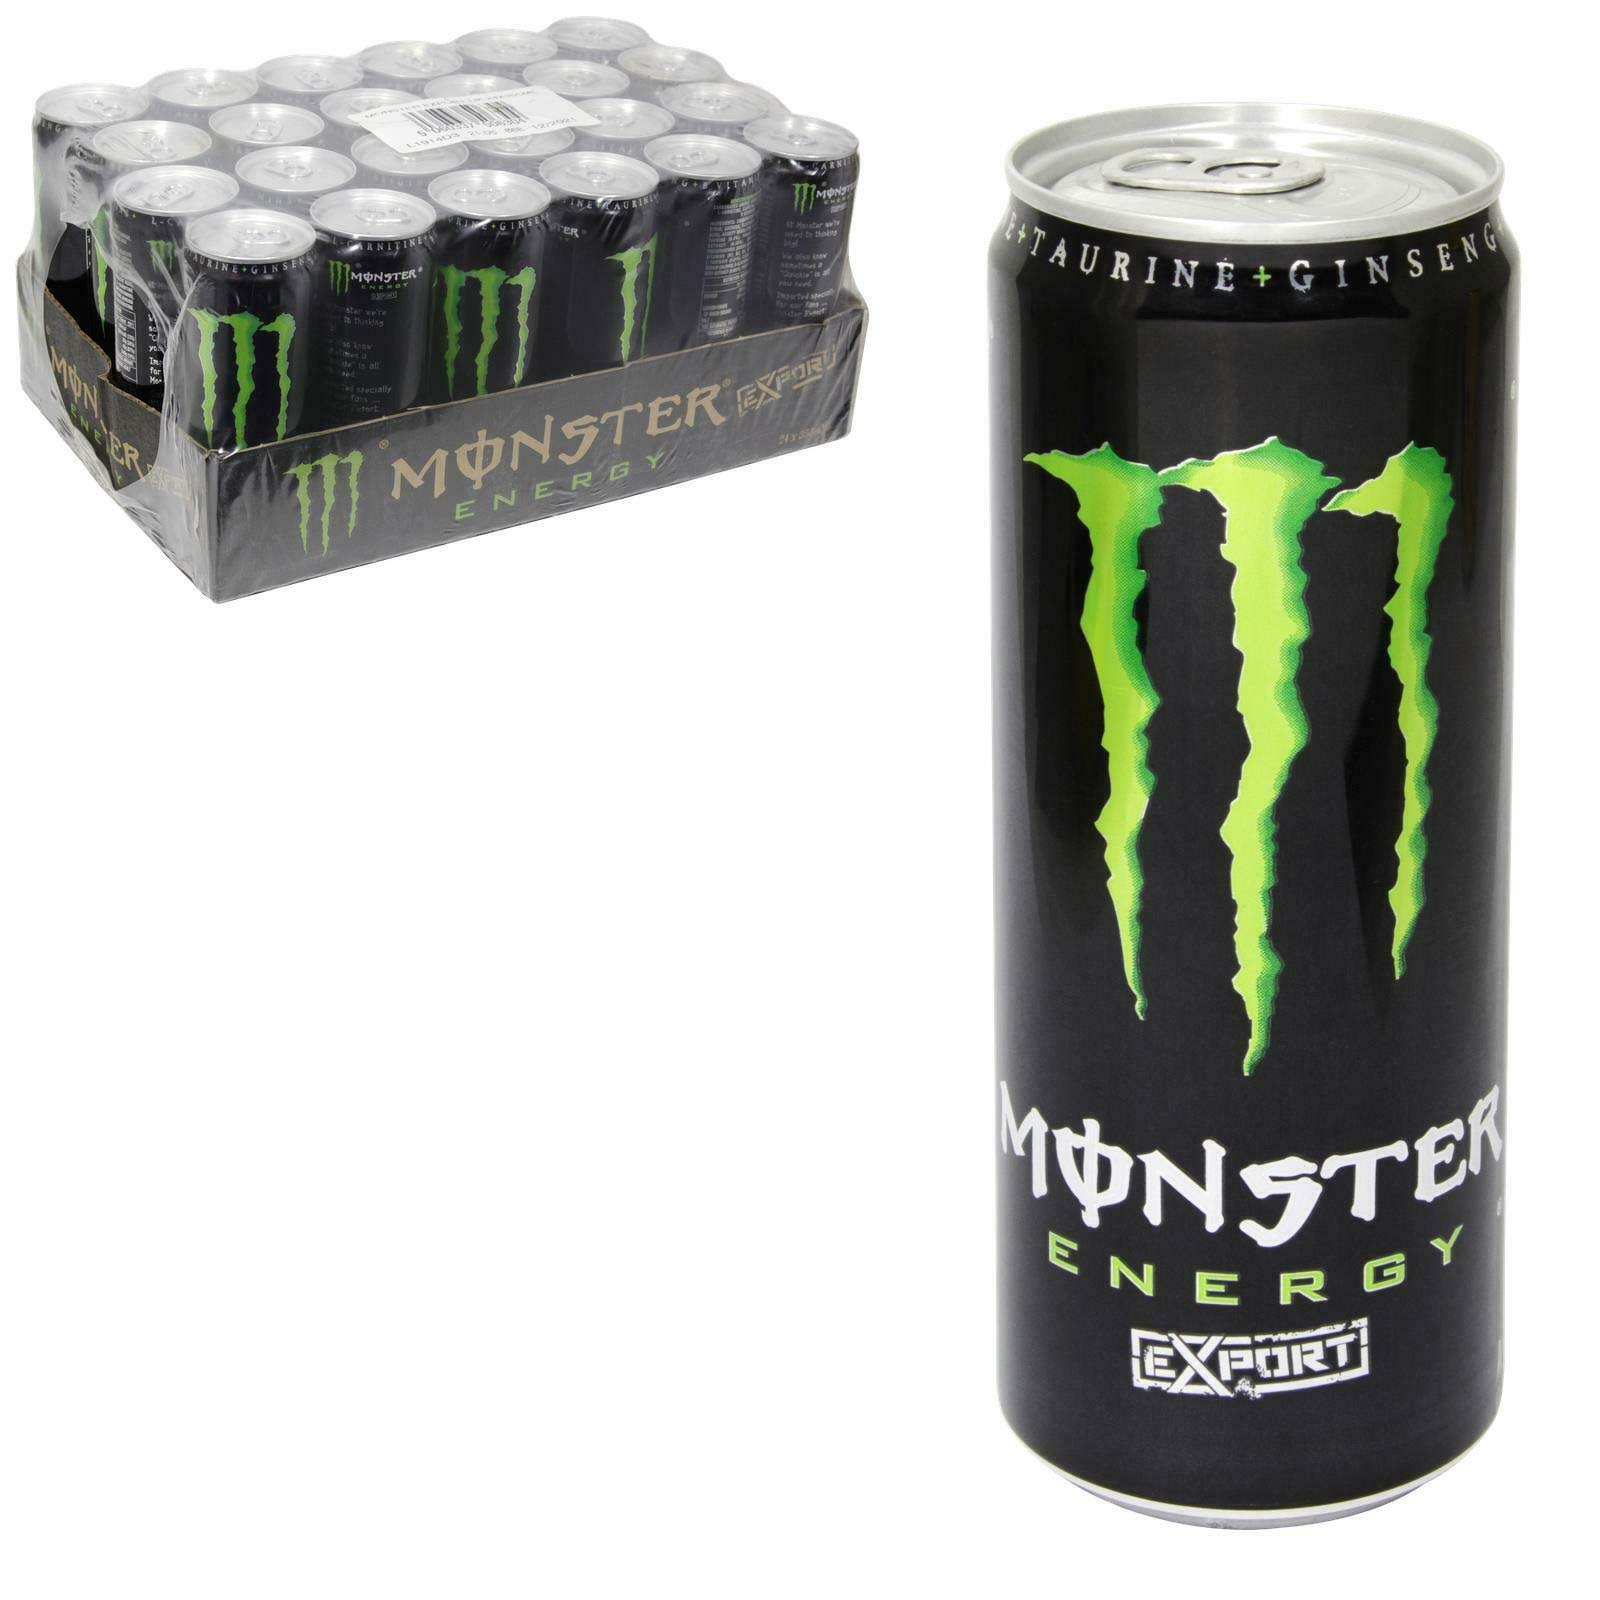 Monster Energy Drink Original Export Taurine Caffeine 355ml (Box of 24)